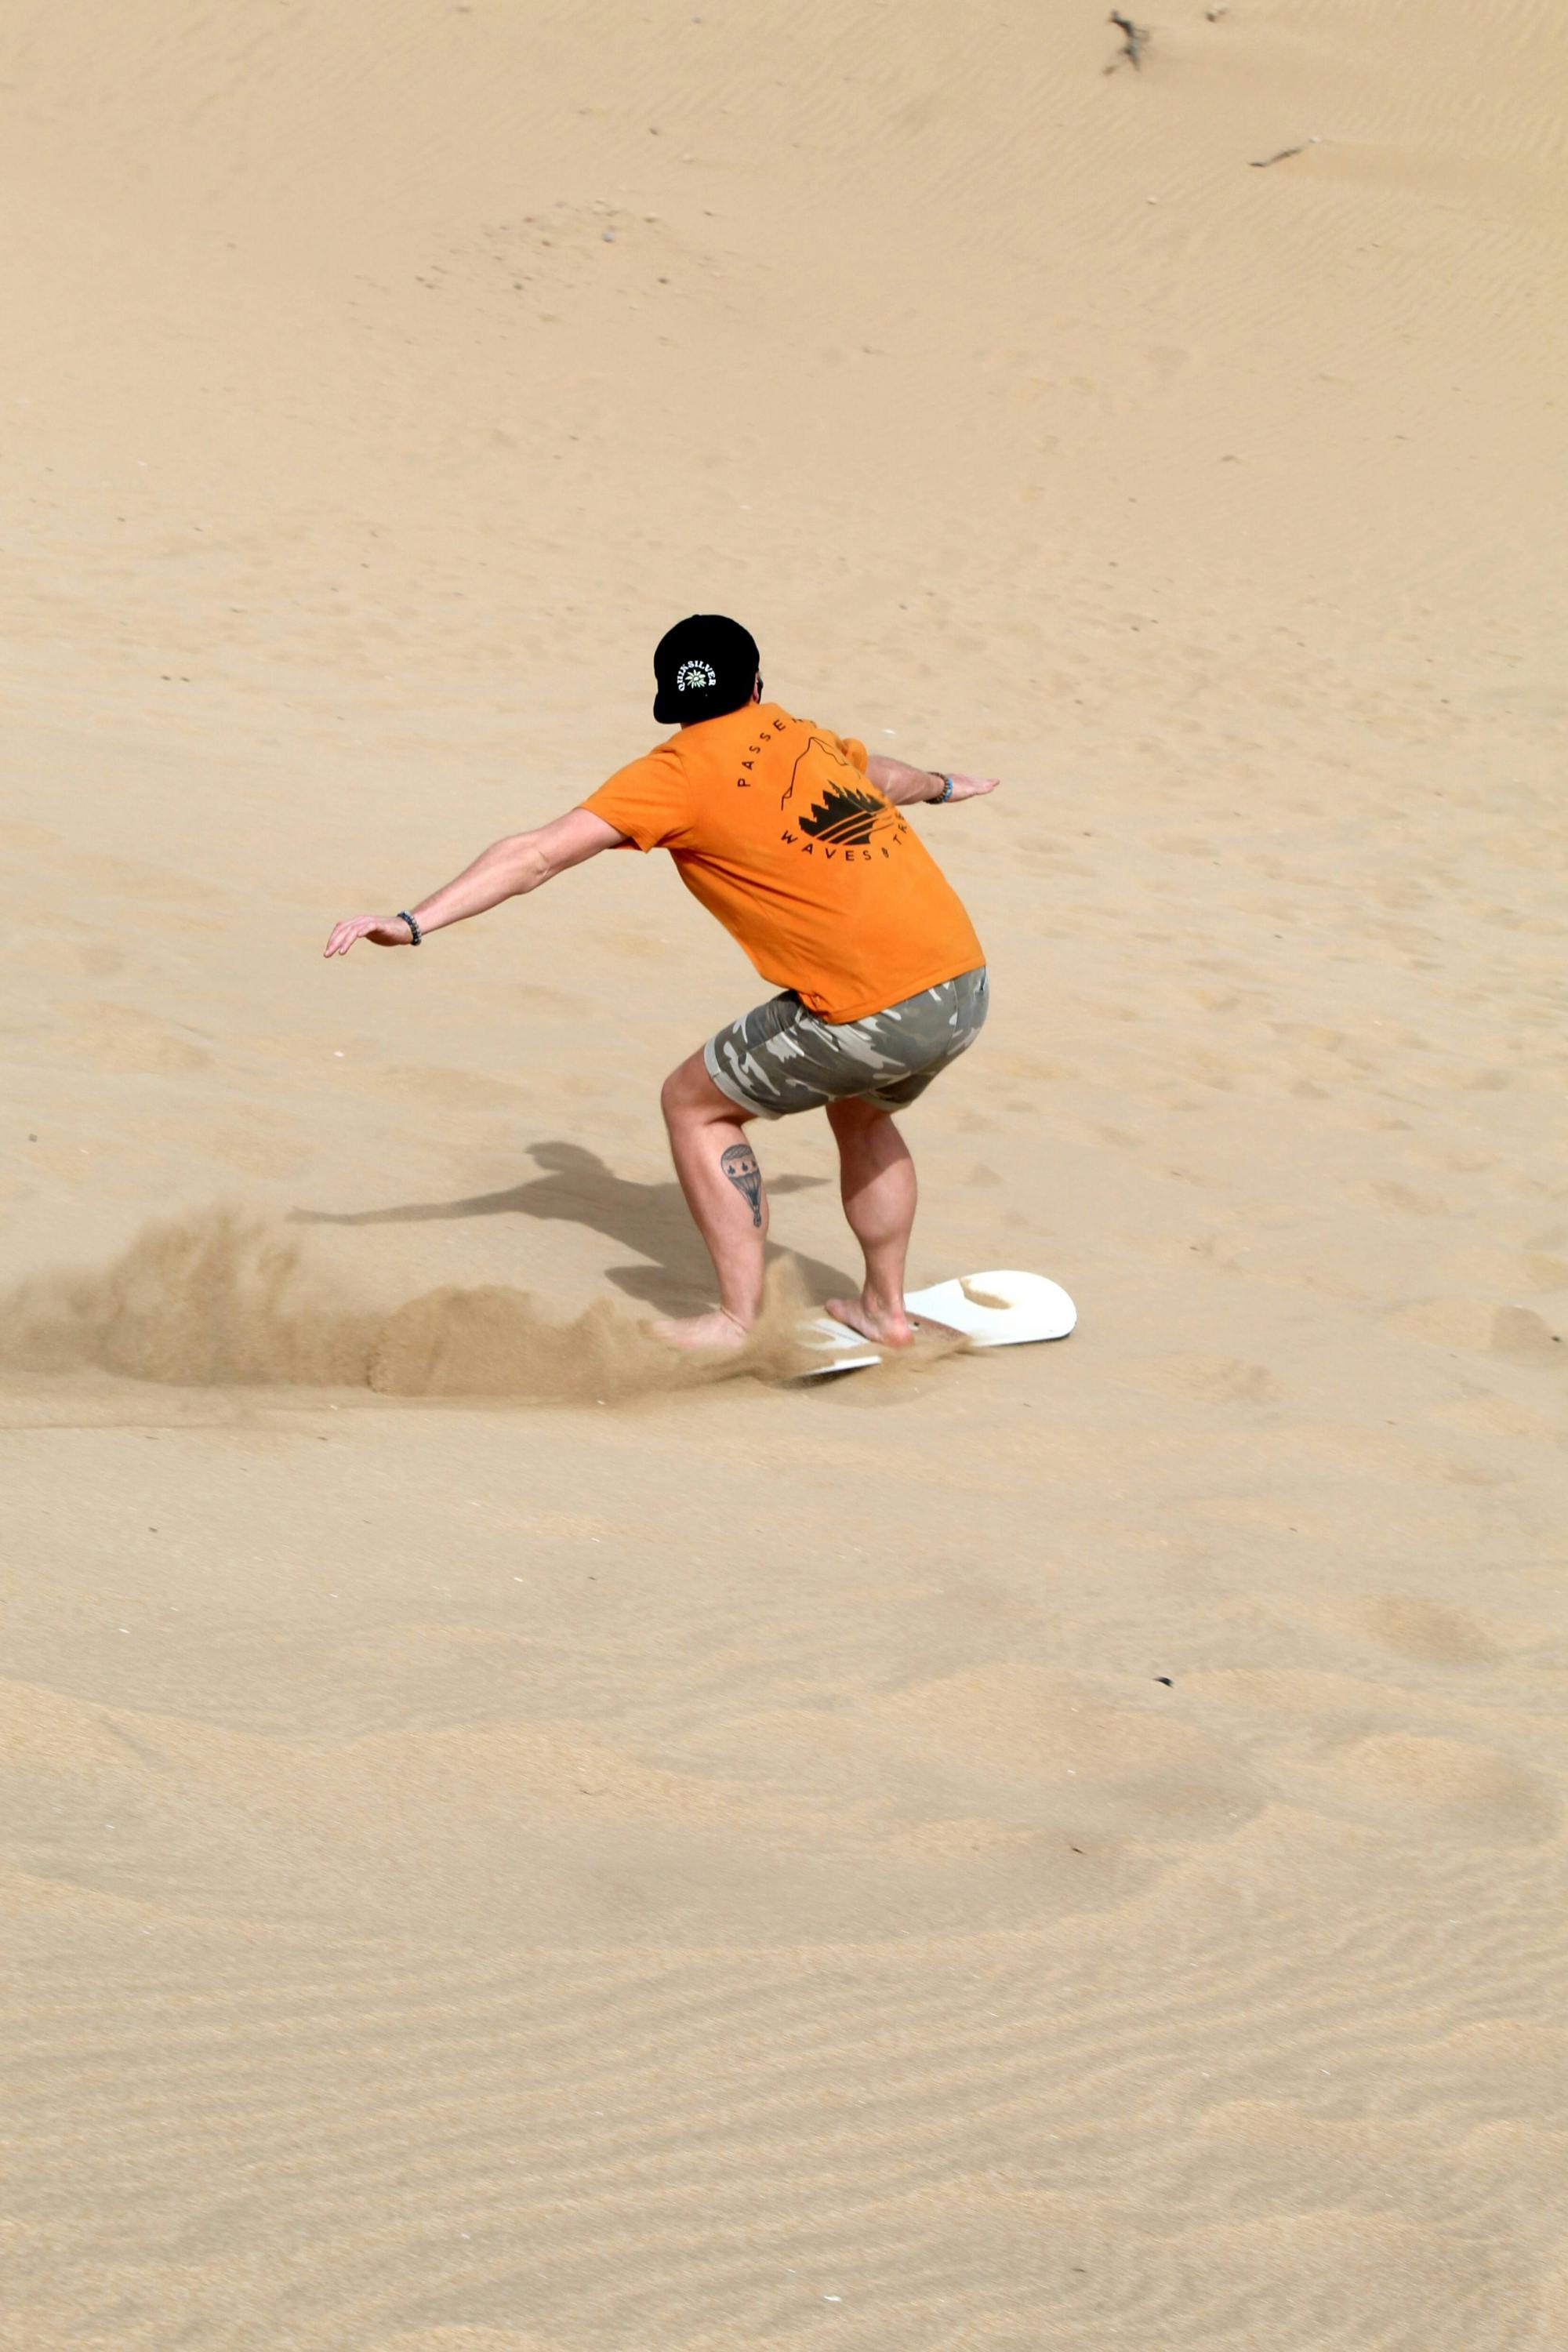 Atlantic Coast Tour and Timlalin Dunes Sand Boarding Experience Musement